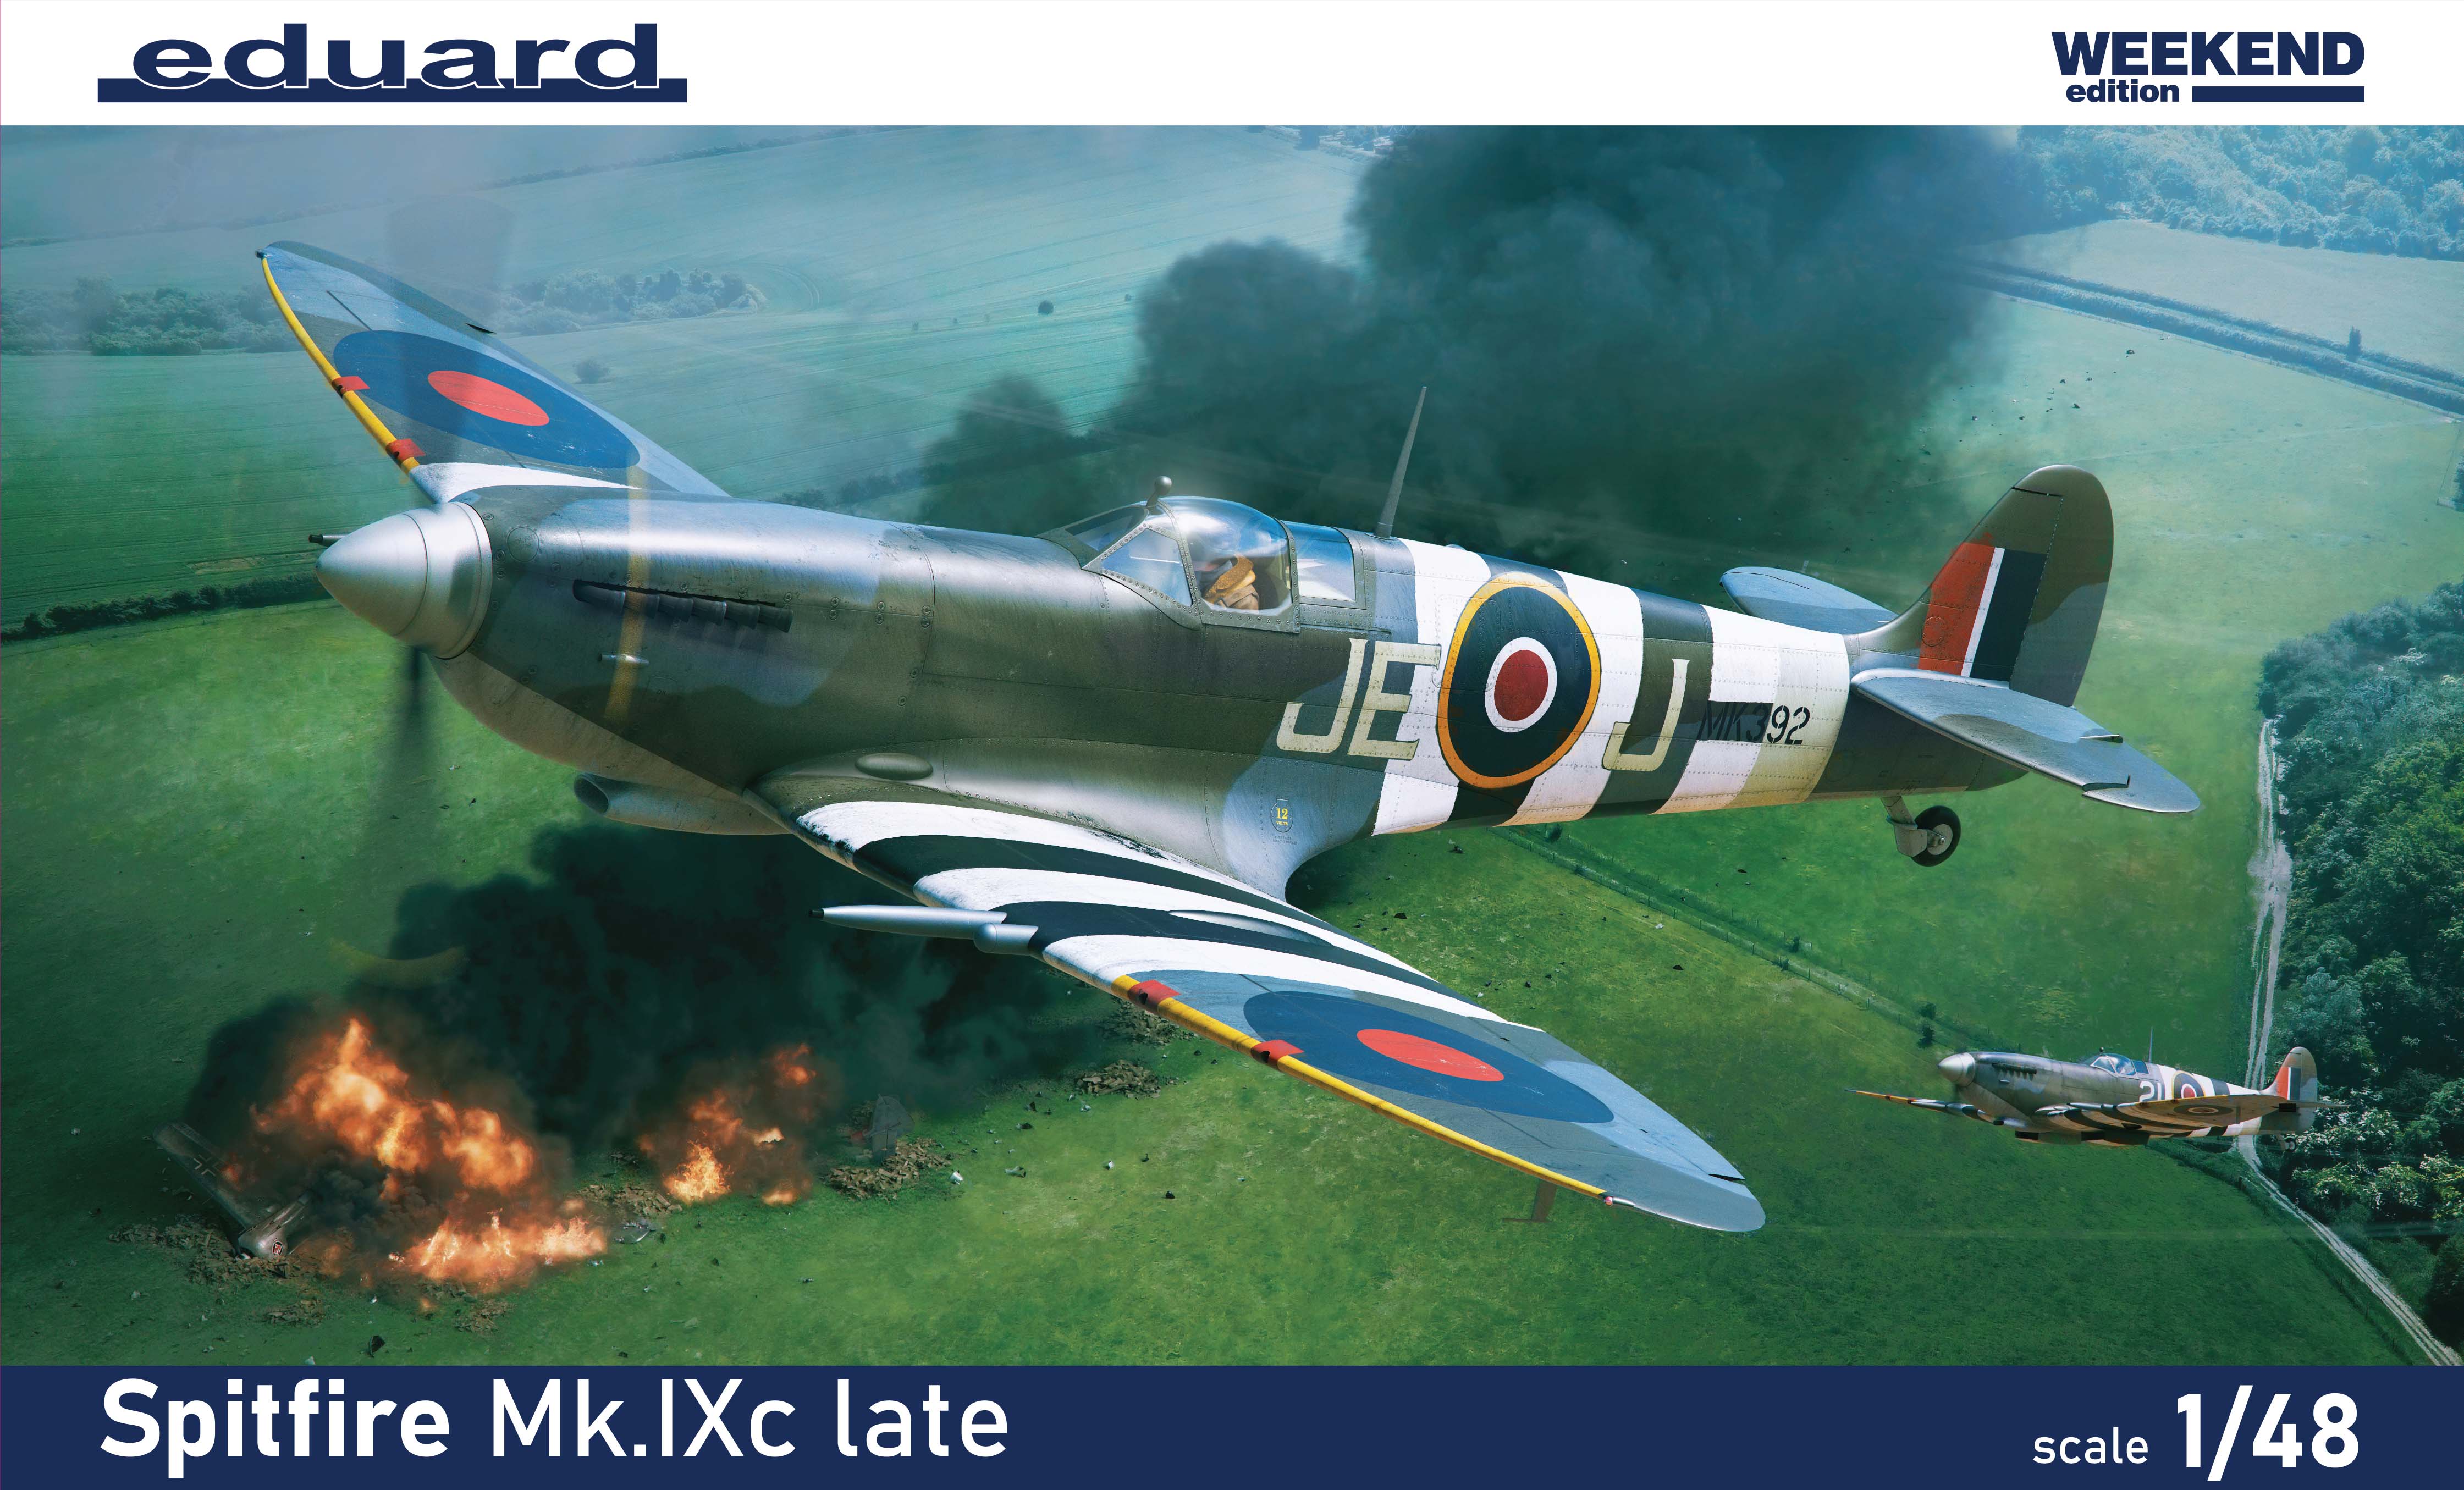 1/48 Spitfire Mk.IXc late (Weekend)